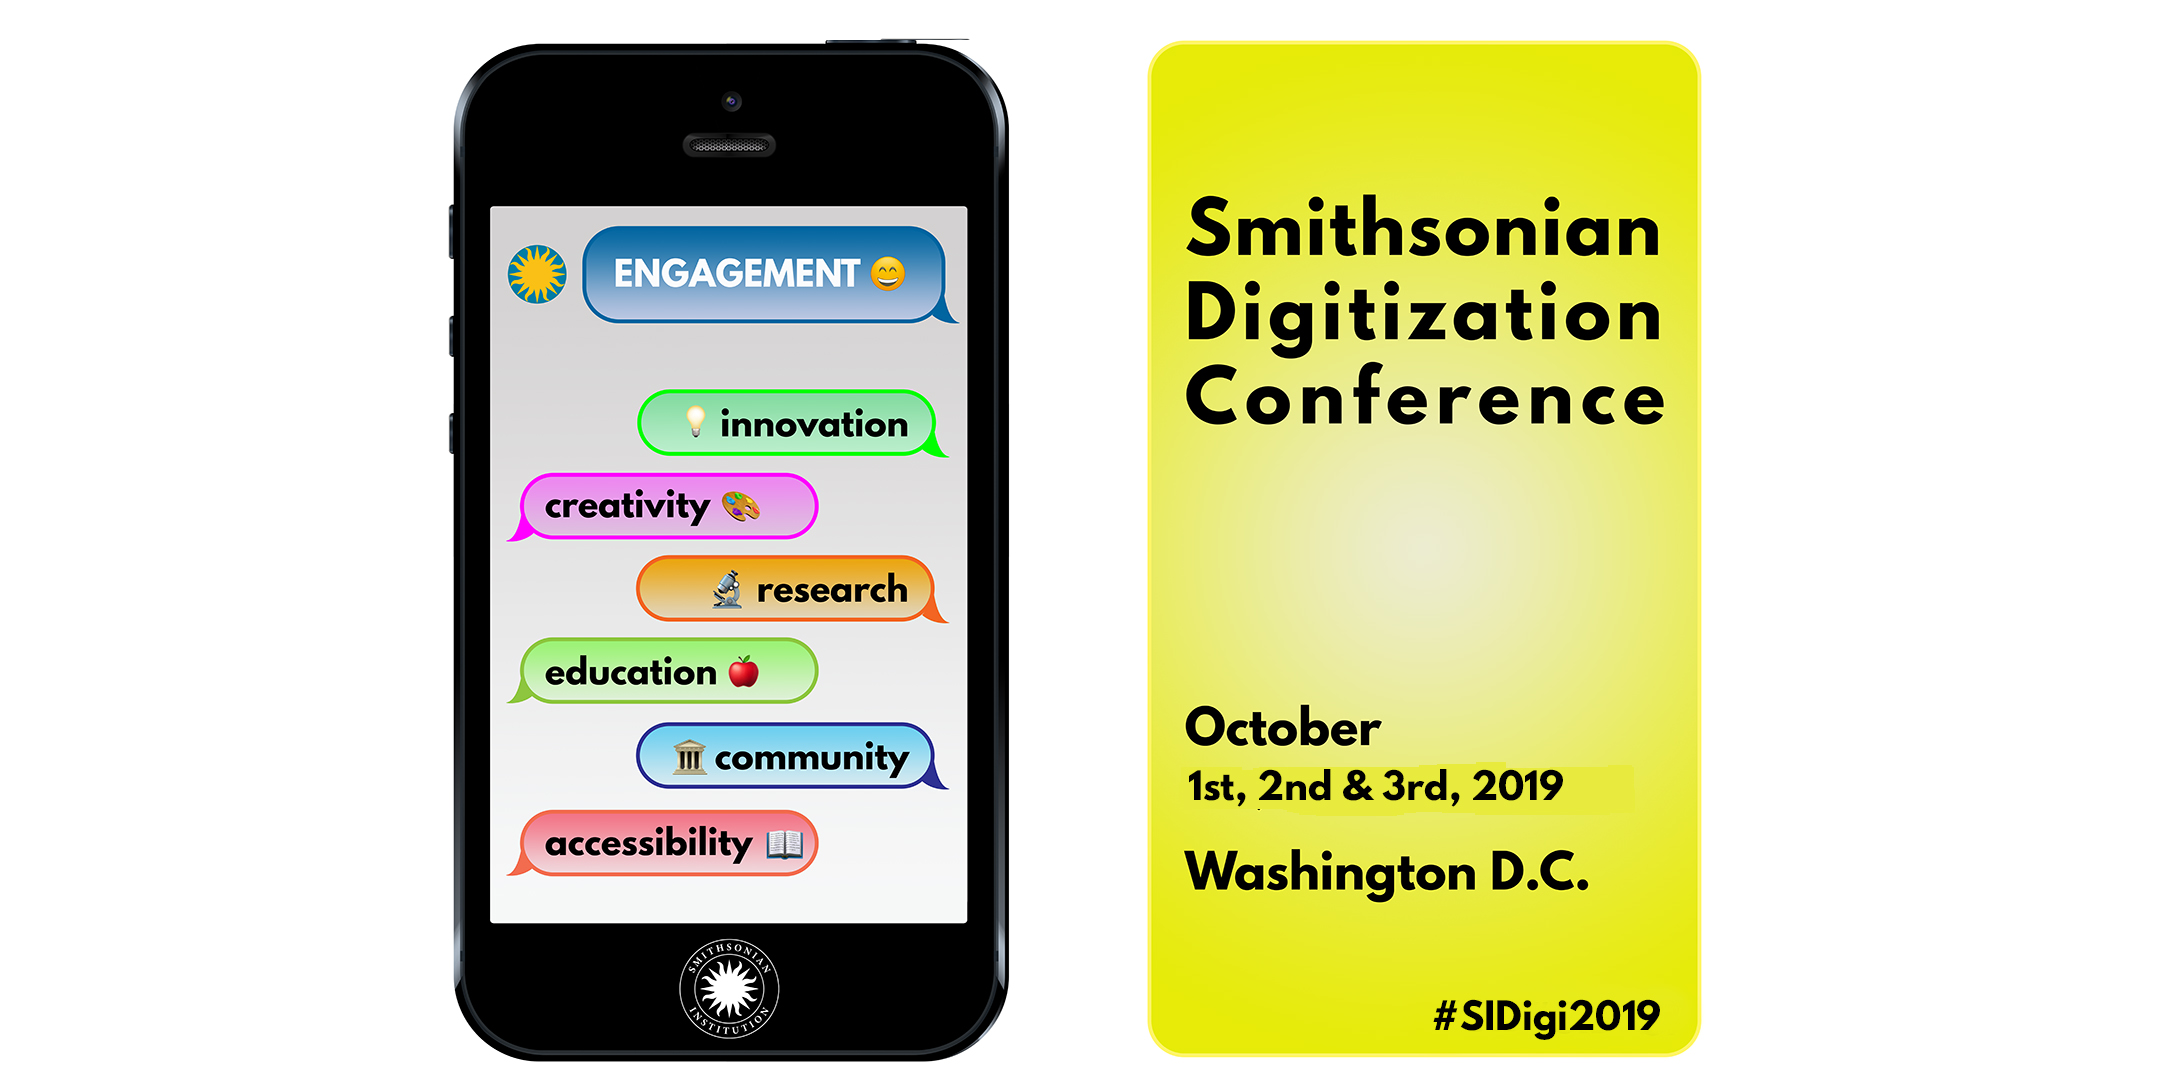 2019 Smithsonian Digitization Conference logo